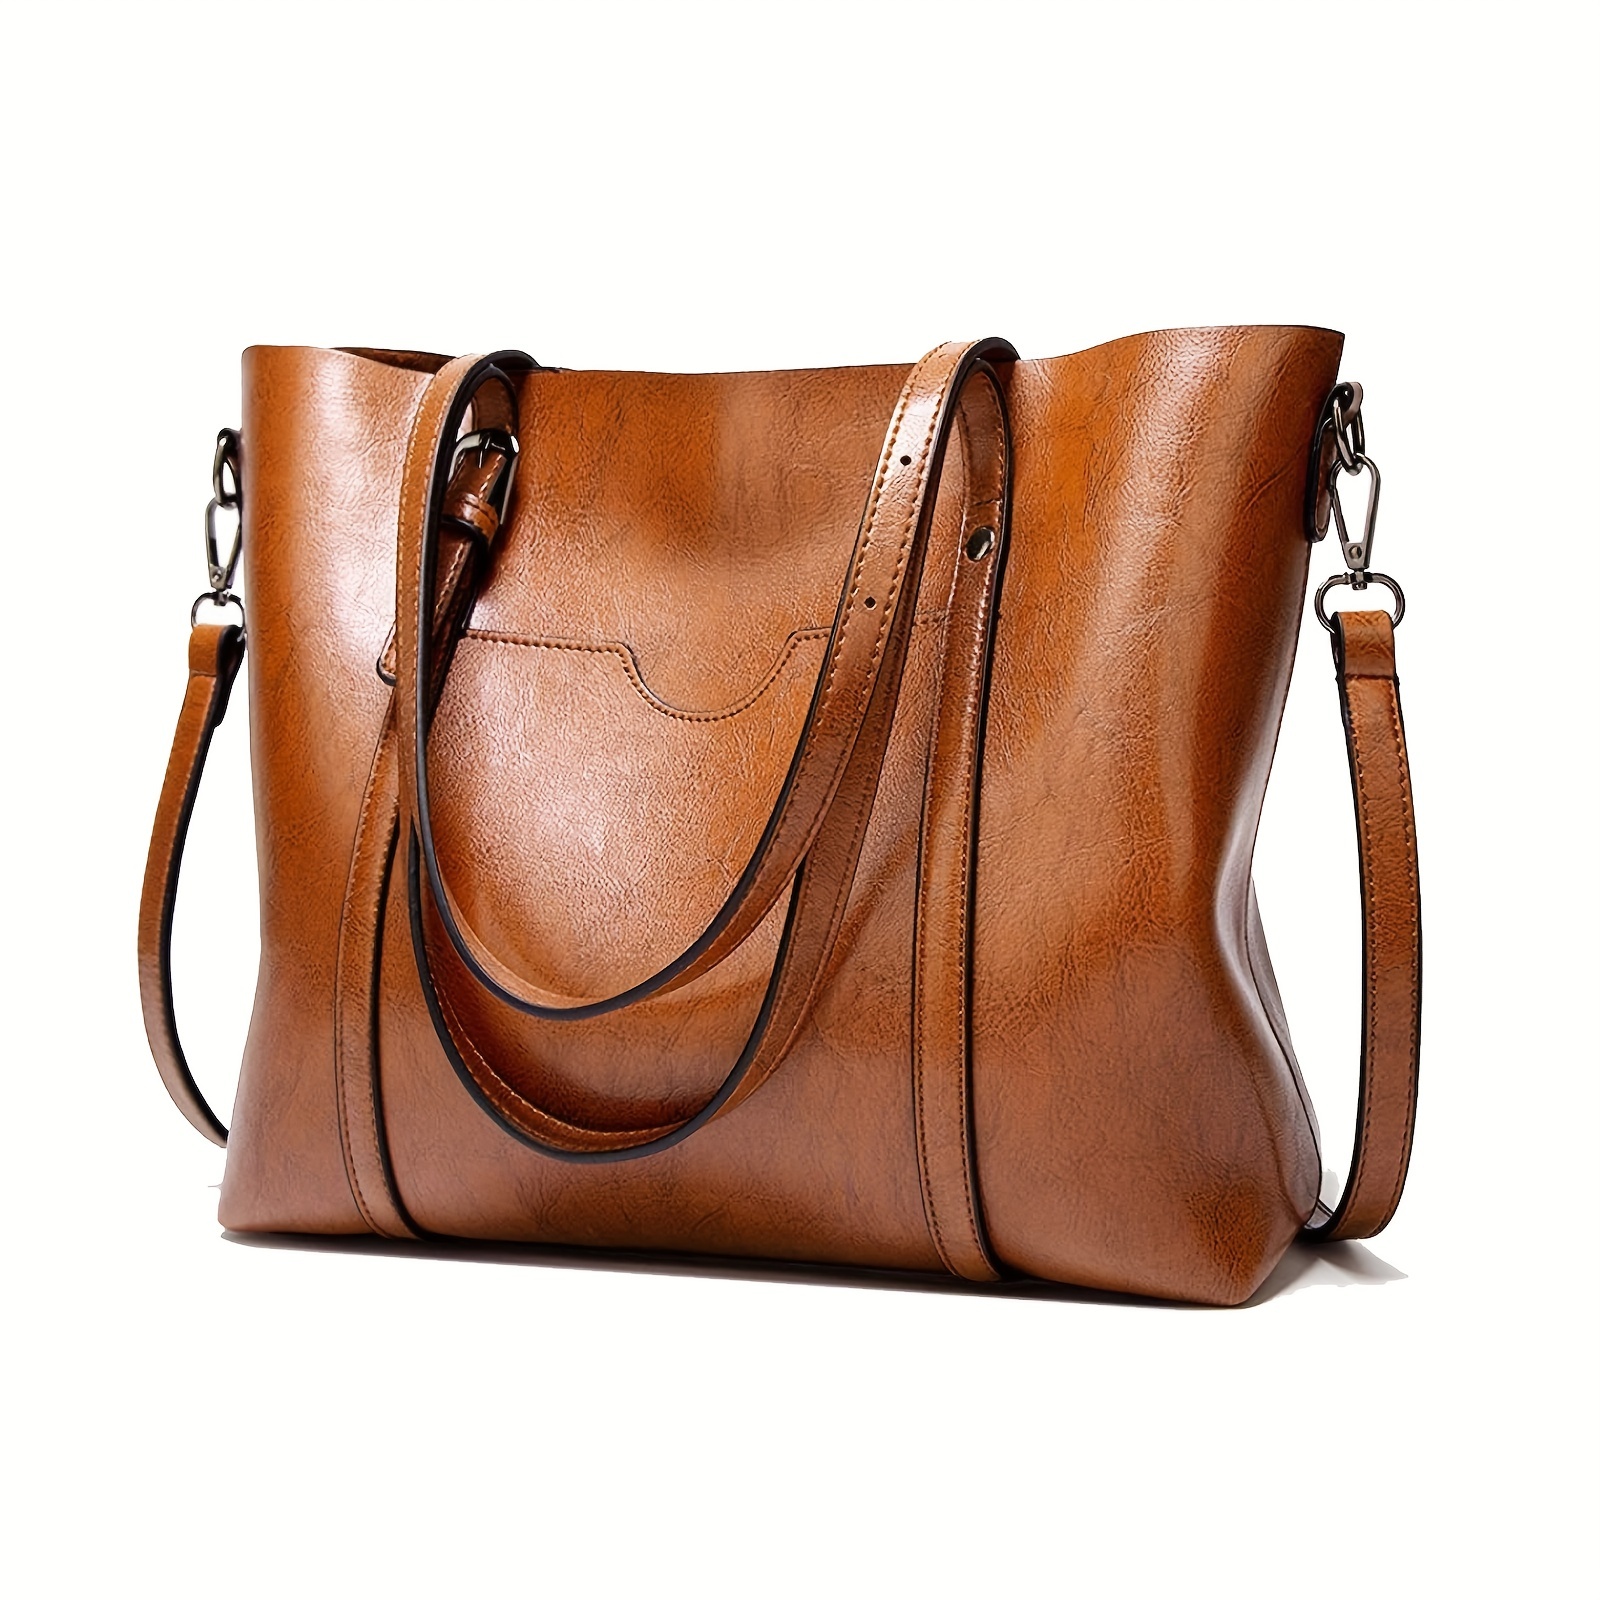 Tan Leather Bag Women Soft Leather Messenger Bag SALE Tan 